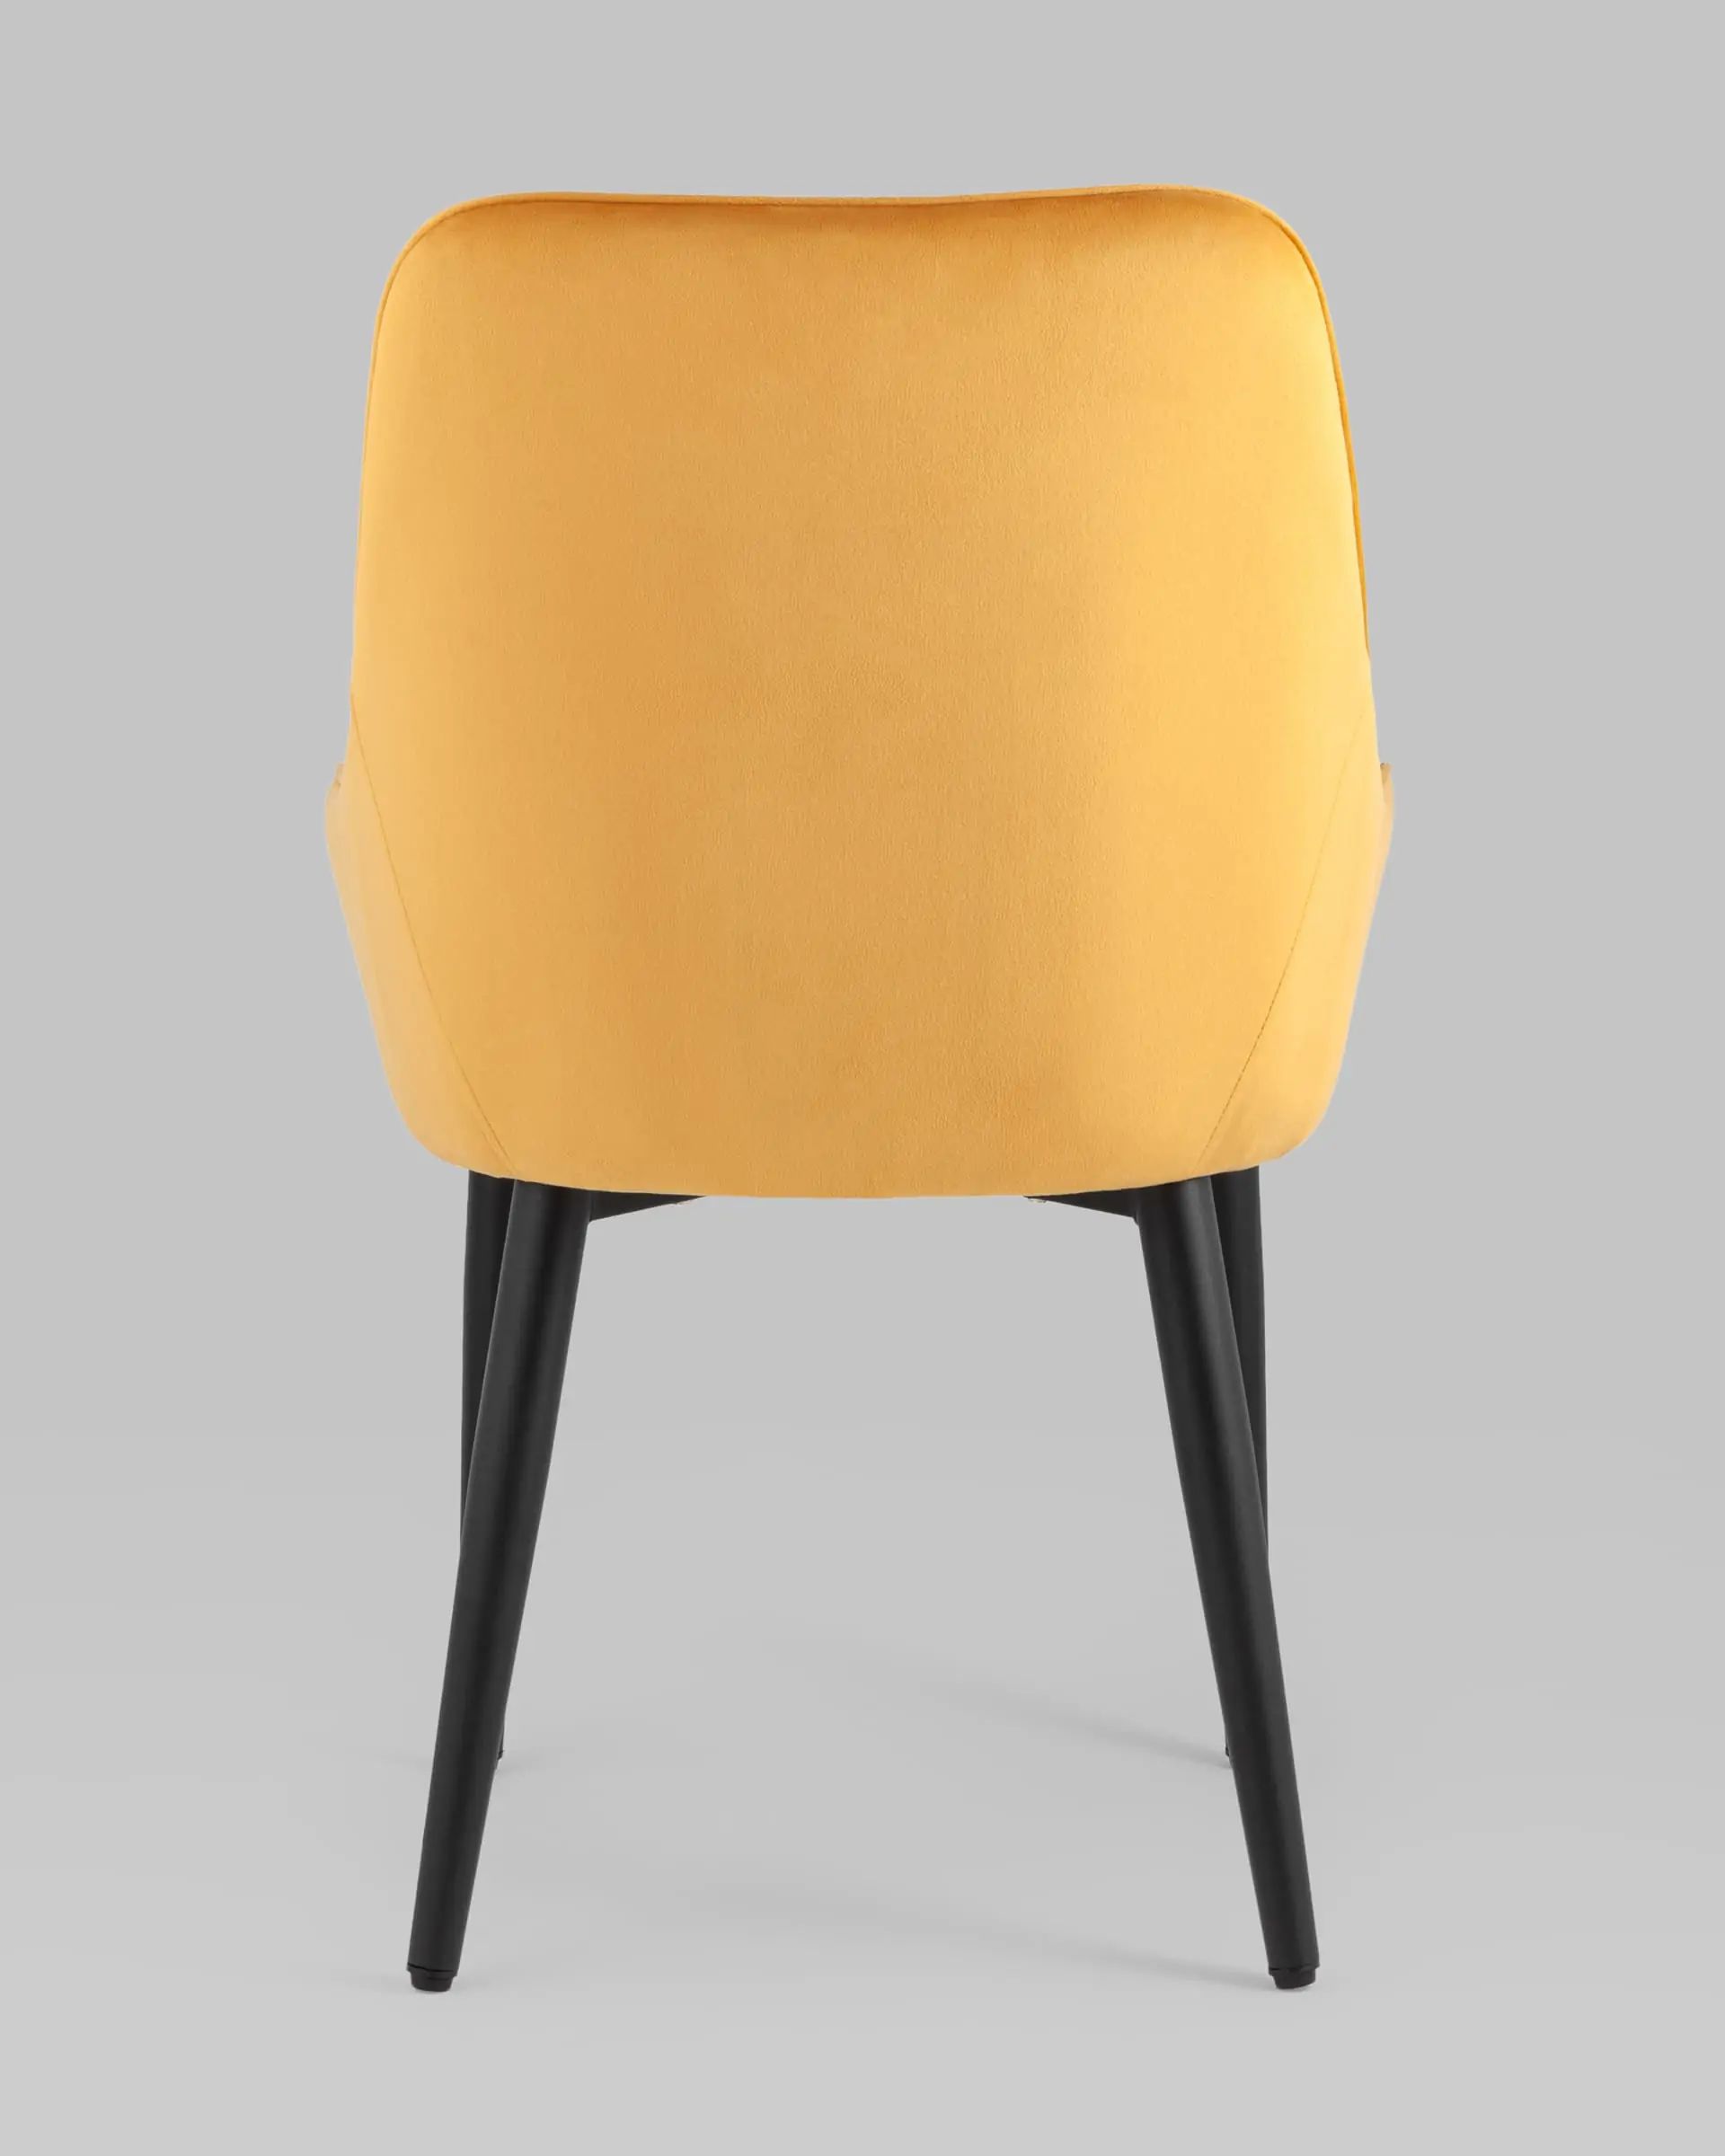 Diana orange chair, velour furniture upholstery